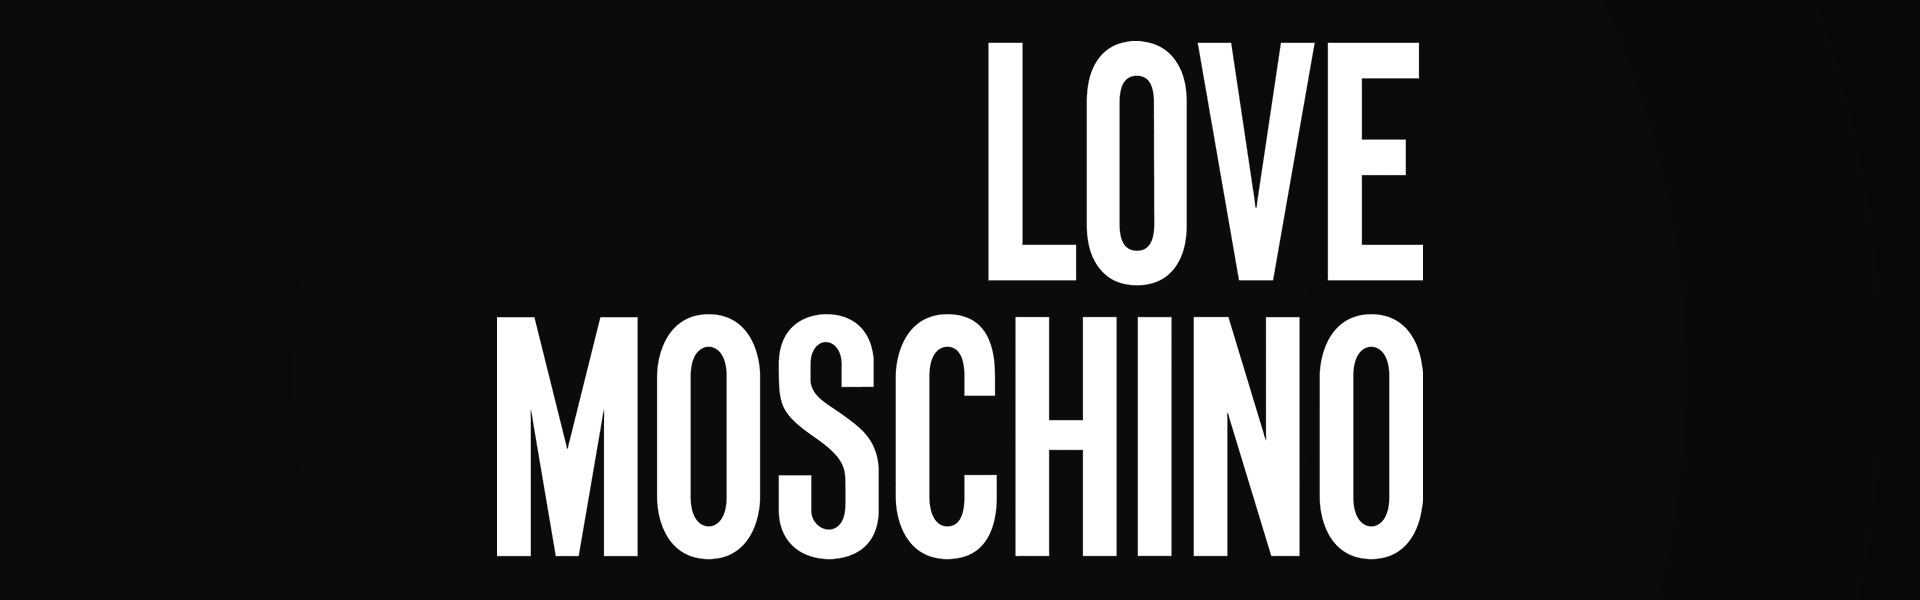 Kingad Love Moschino, 9902 Love Moschino